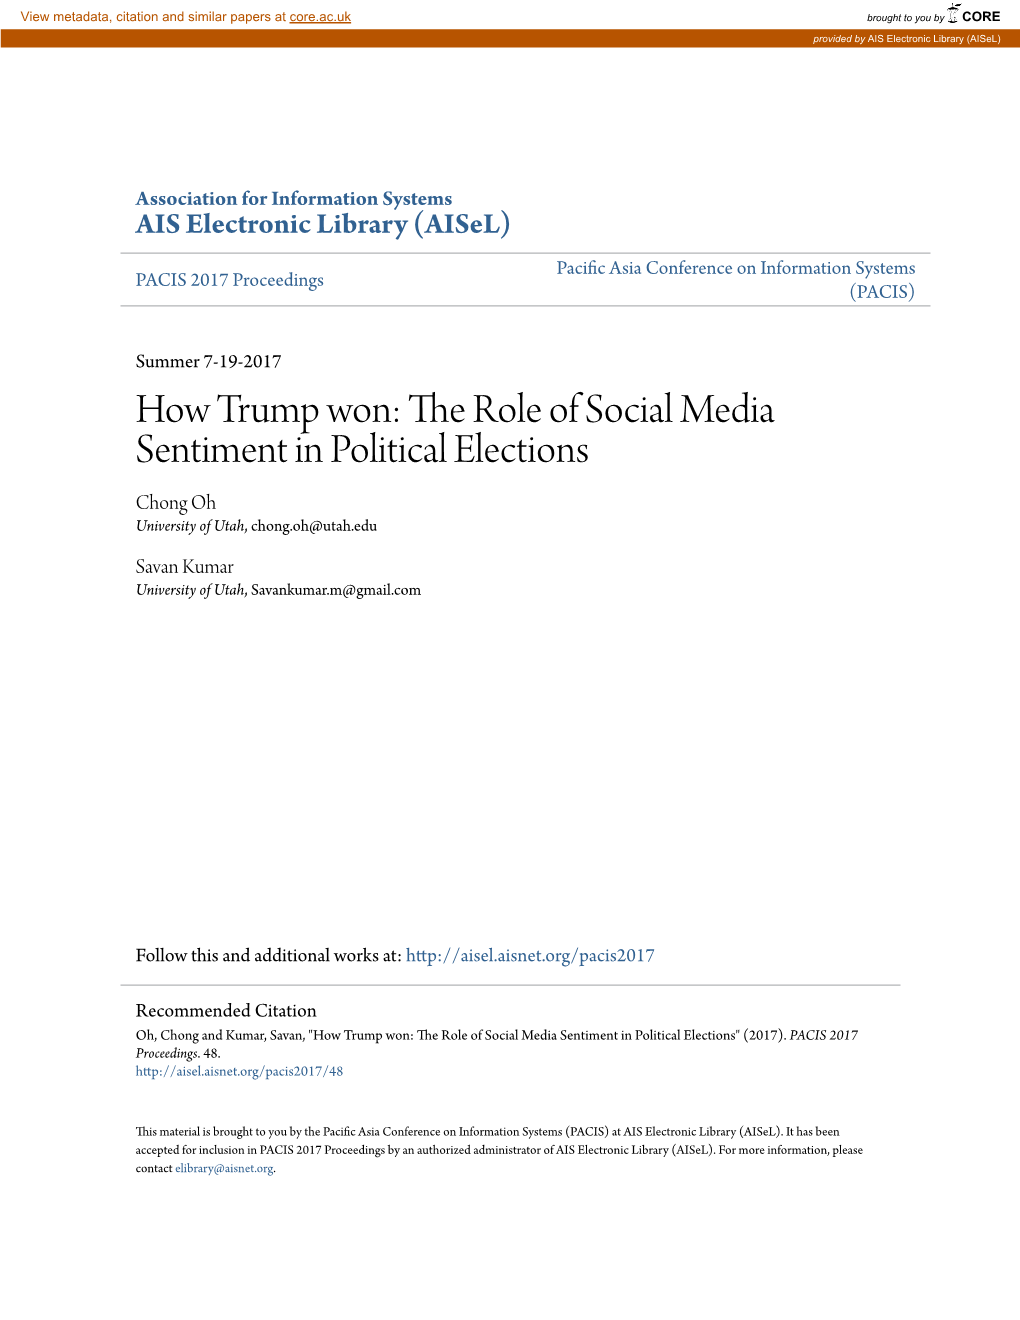 How Trump Won: the Role of Social Media Sentiment in Political Elections Chong Oh University of Utah, Chong.Oh@Utah.Edu